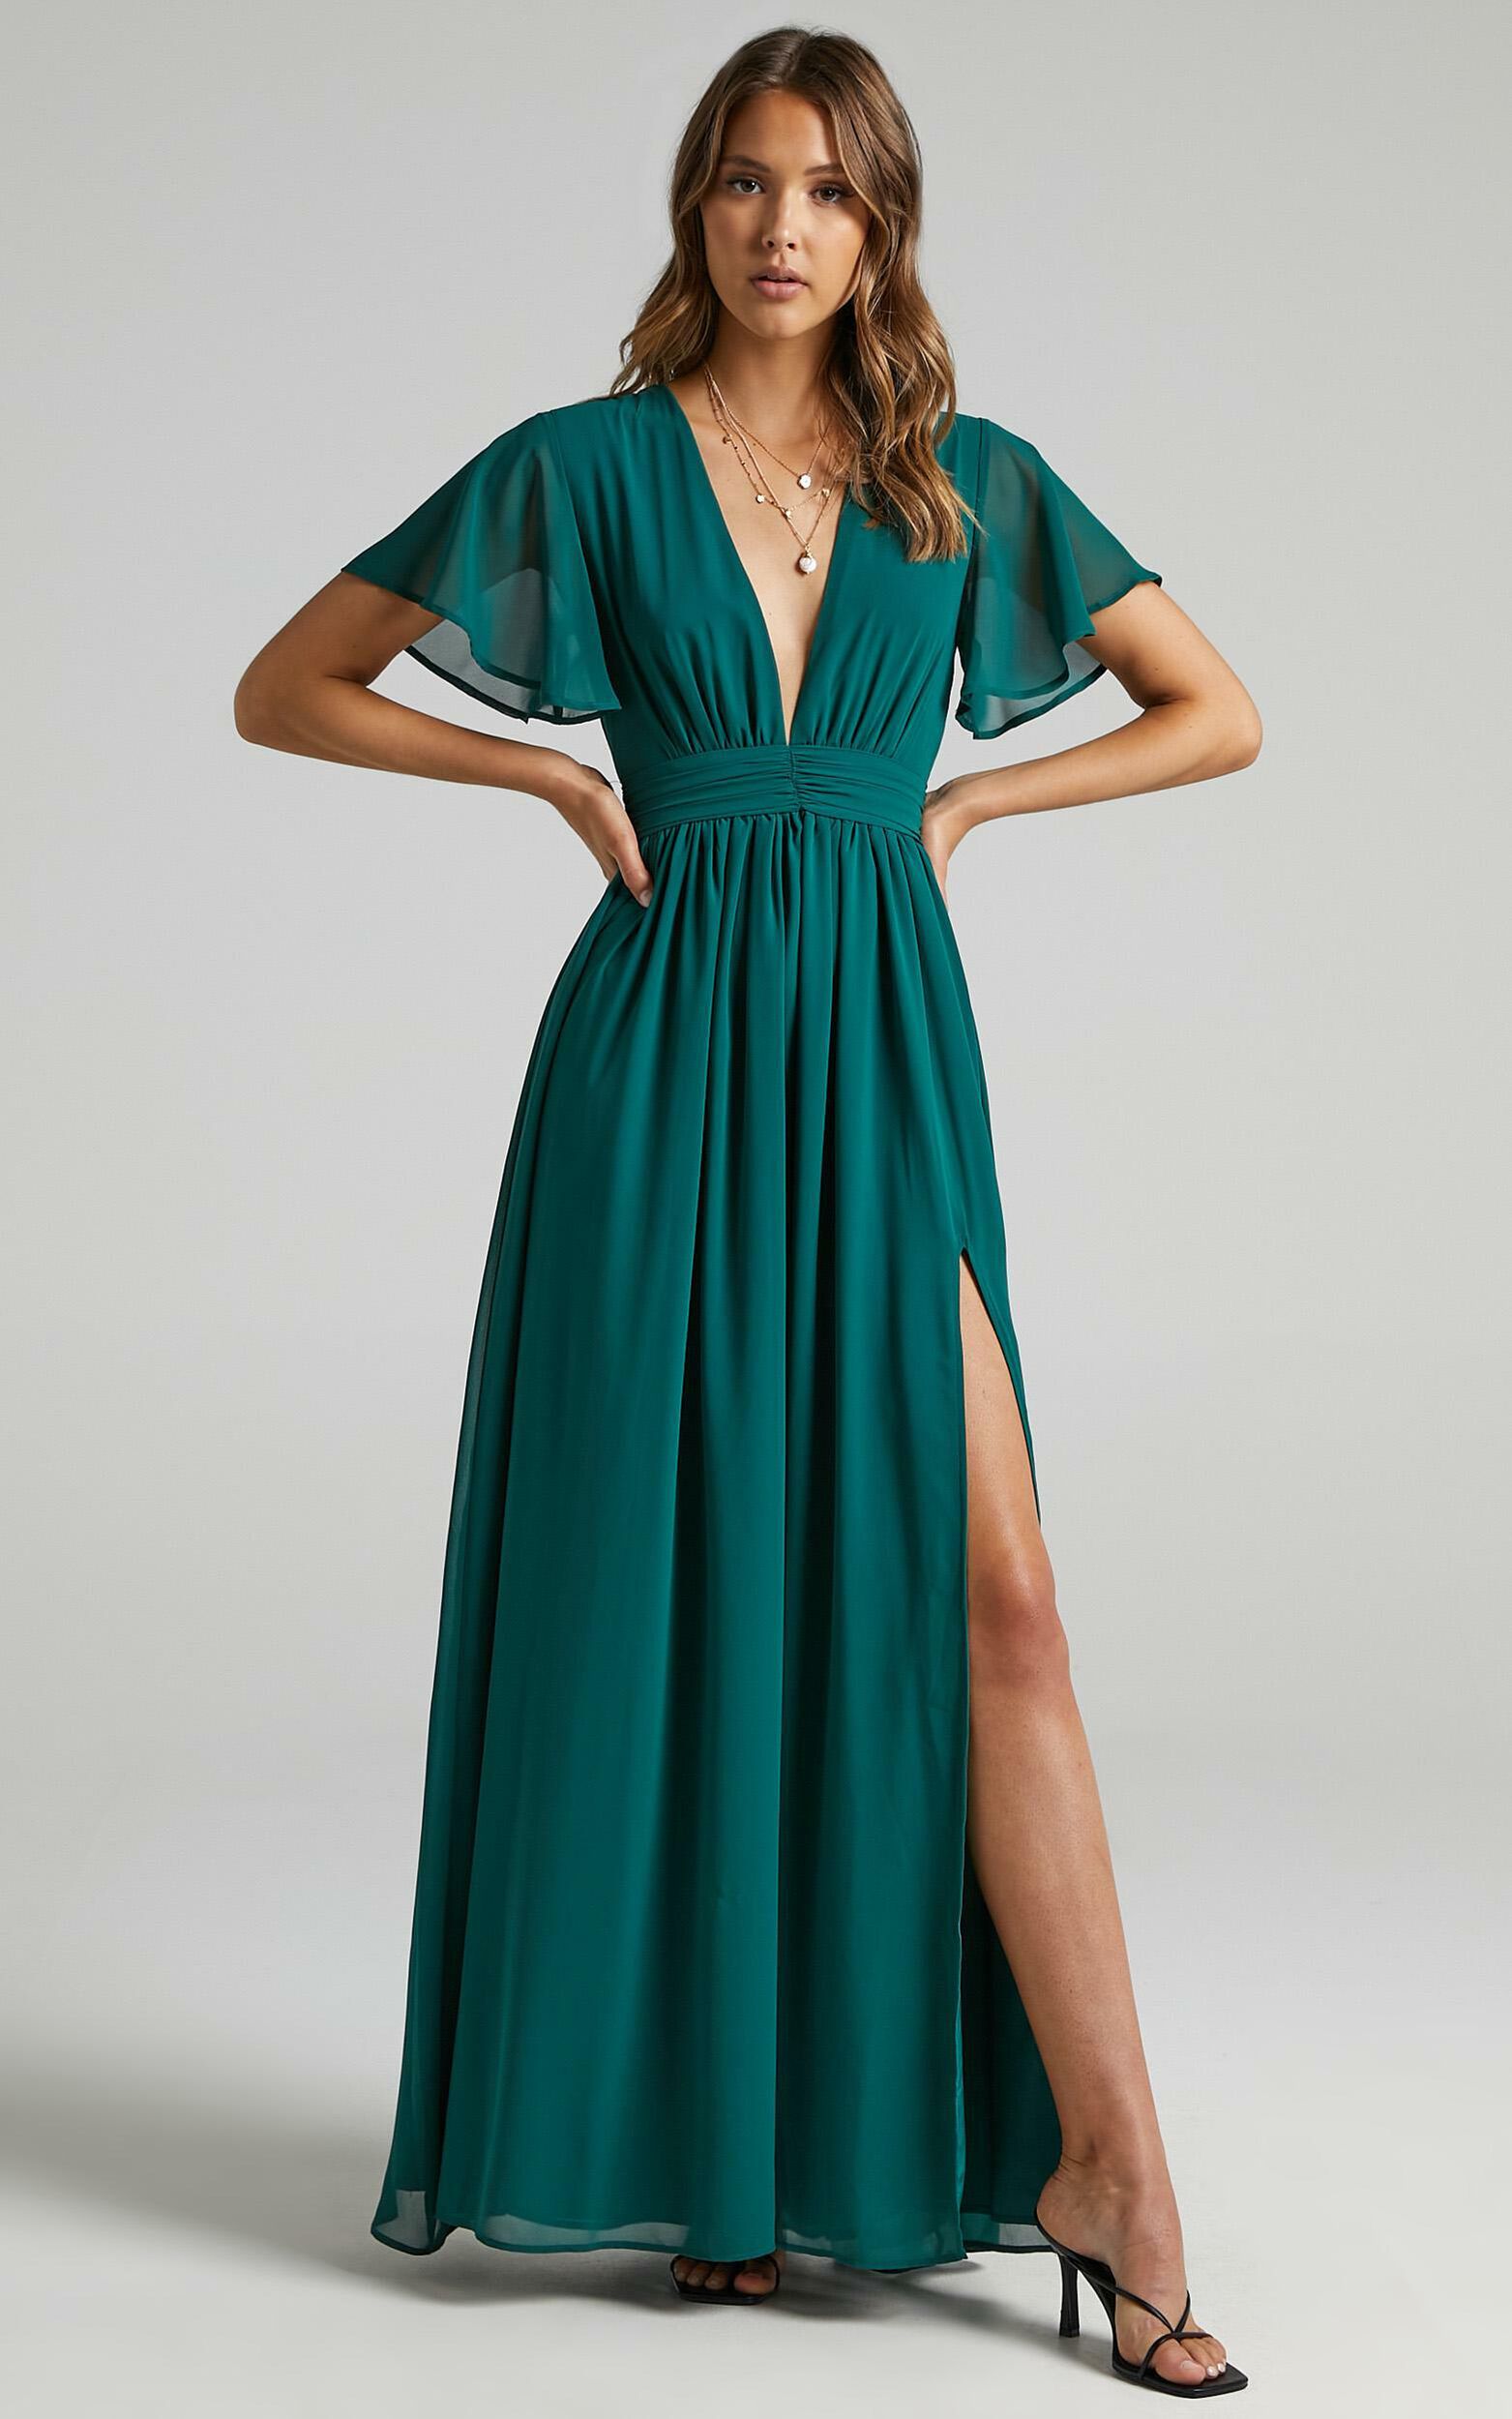 December Midi Dress - Empire Waist Dress in Emerald - 06, GRN1